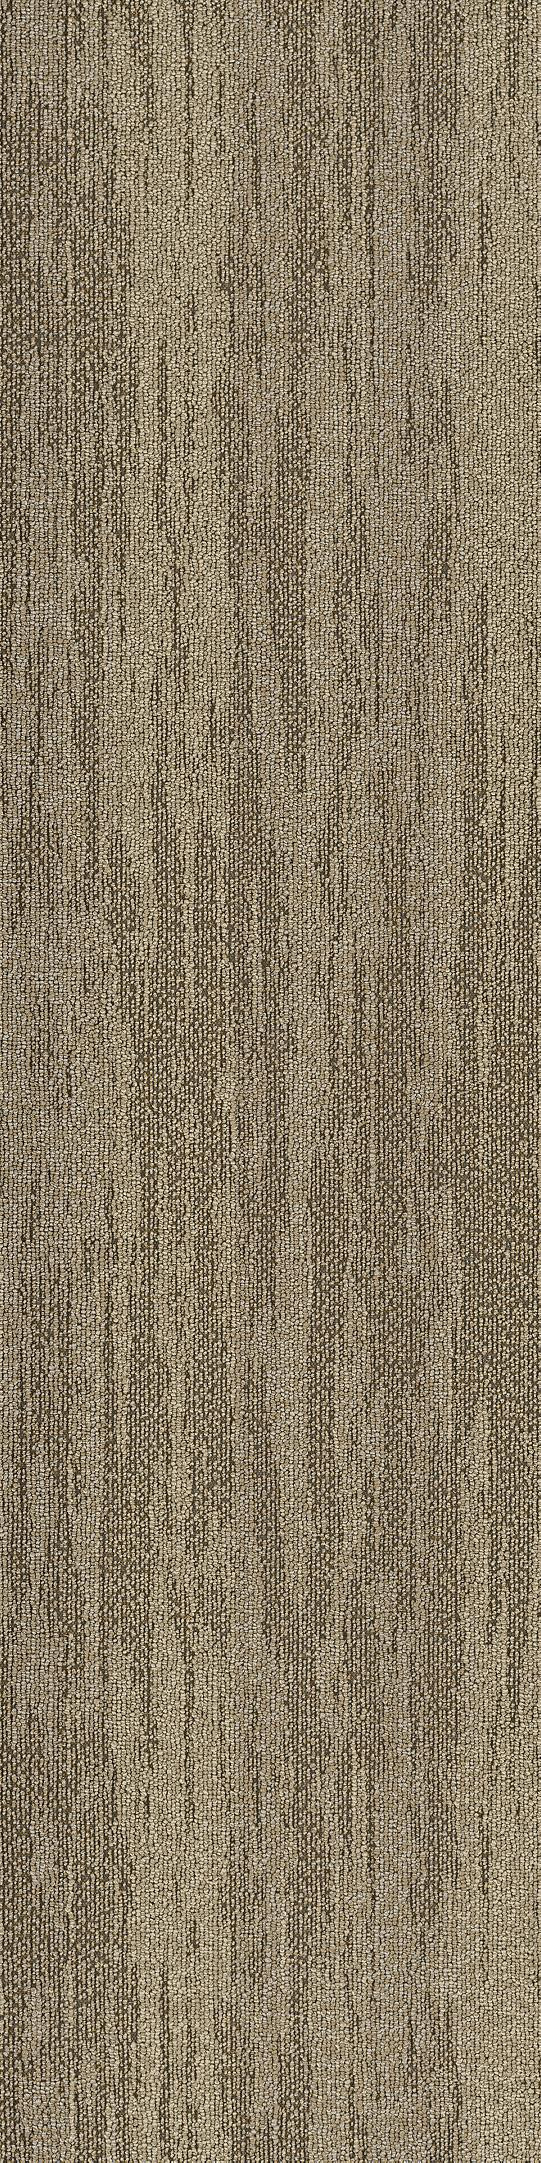 Shaw Alloy Shimmer Carpet Tile - Quartz Bronze